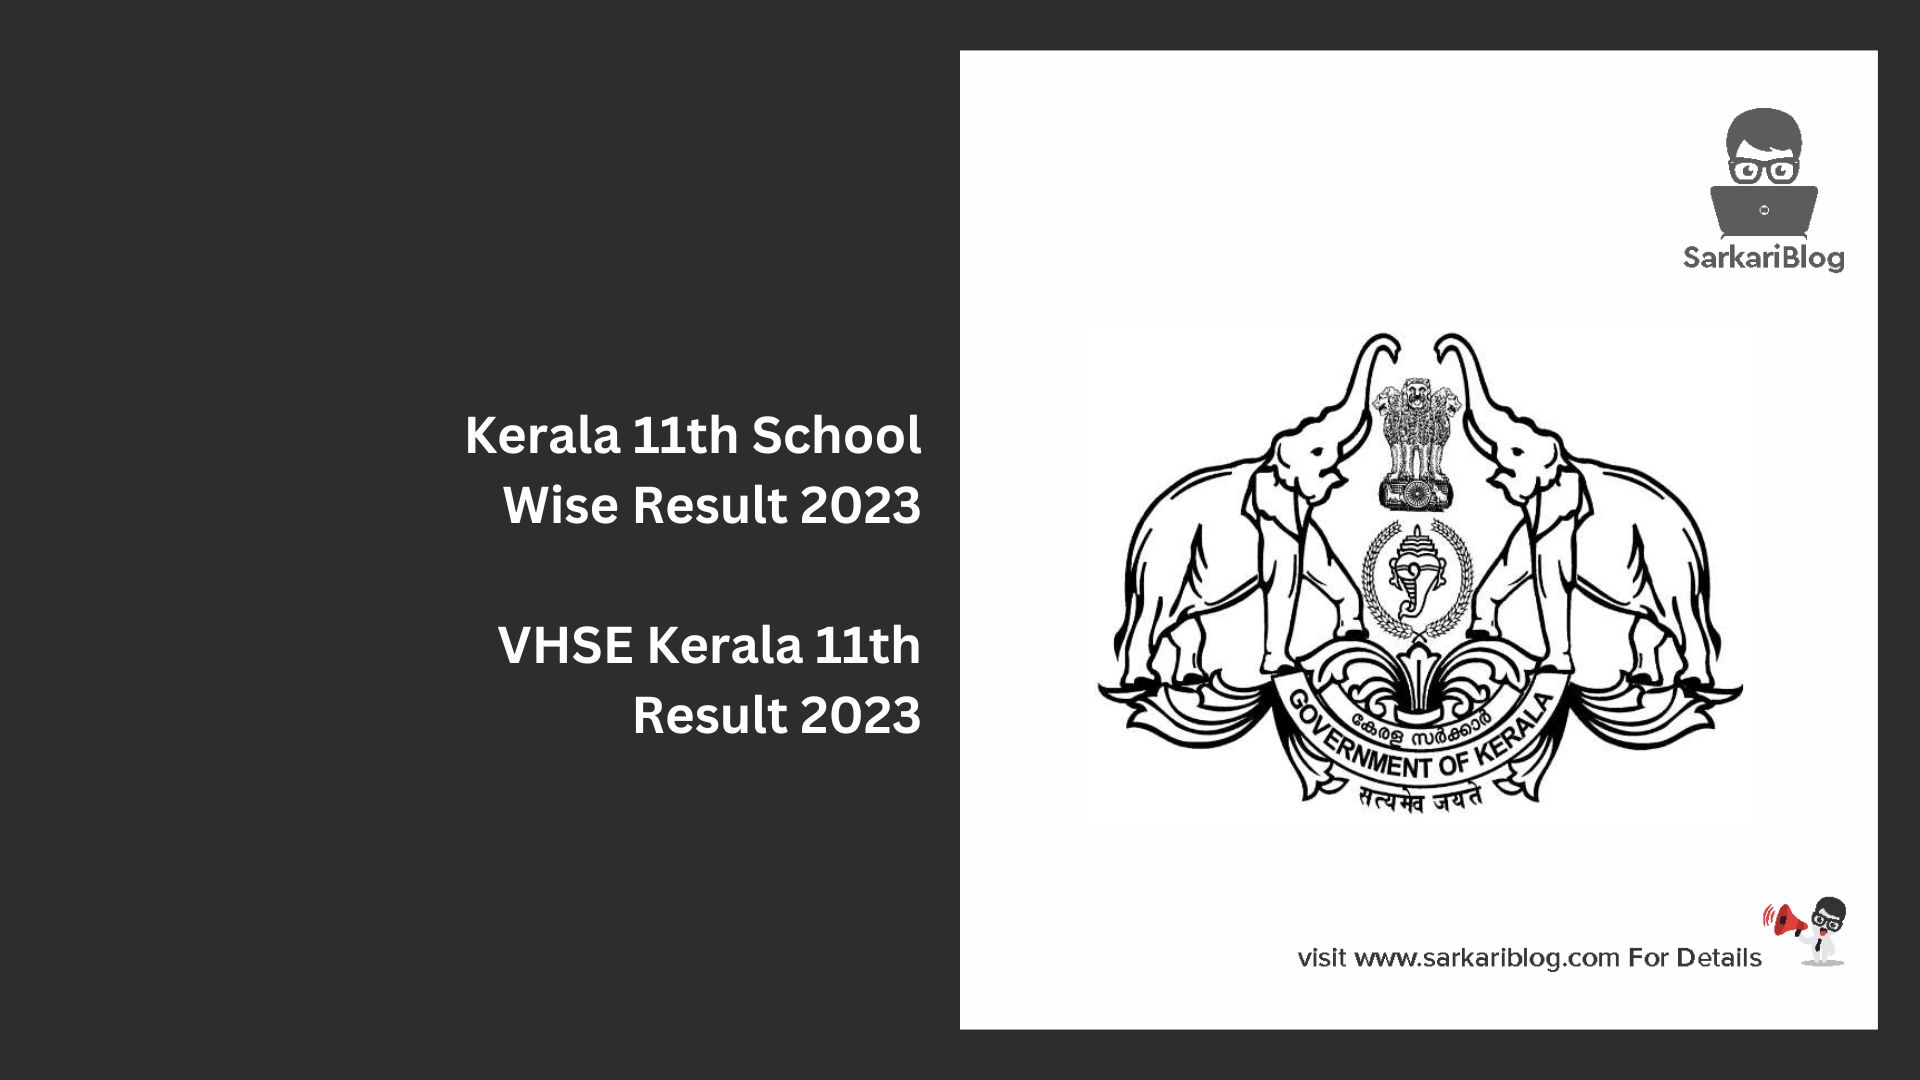 Kerala 11th School Wise Result 2023